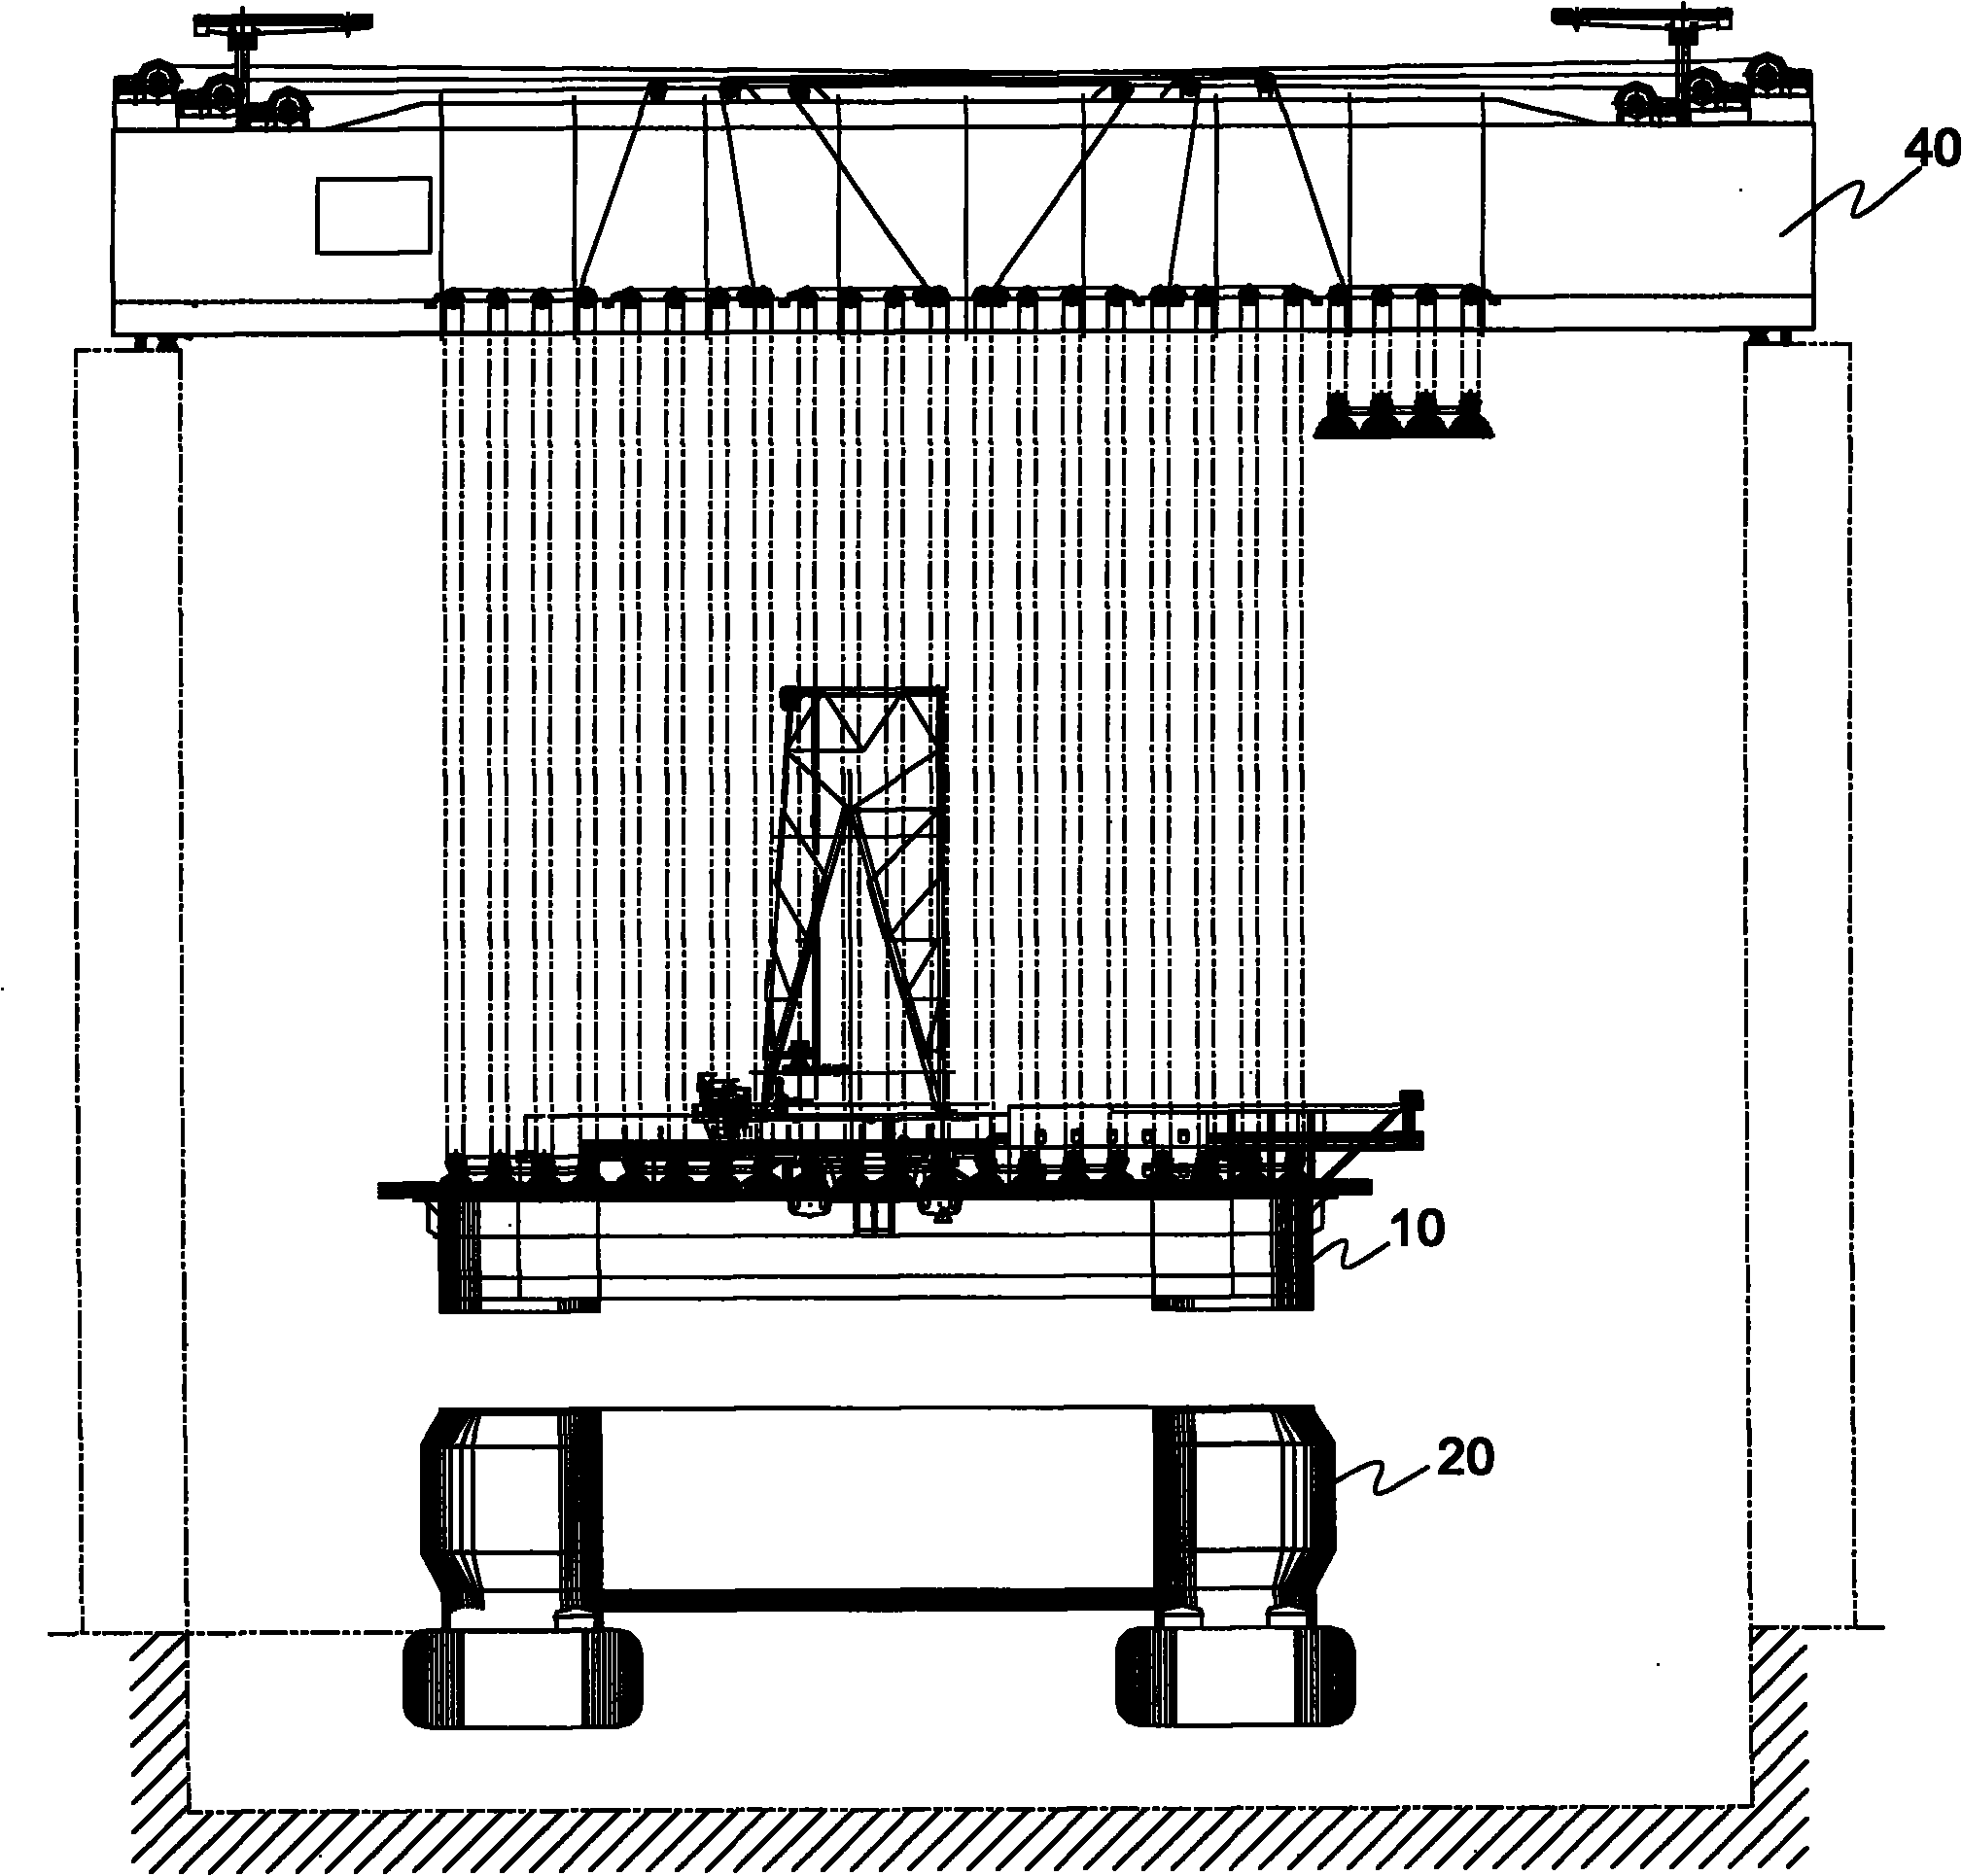 Method for integrally folding semi-submersible drilling platform